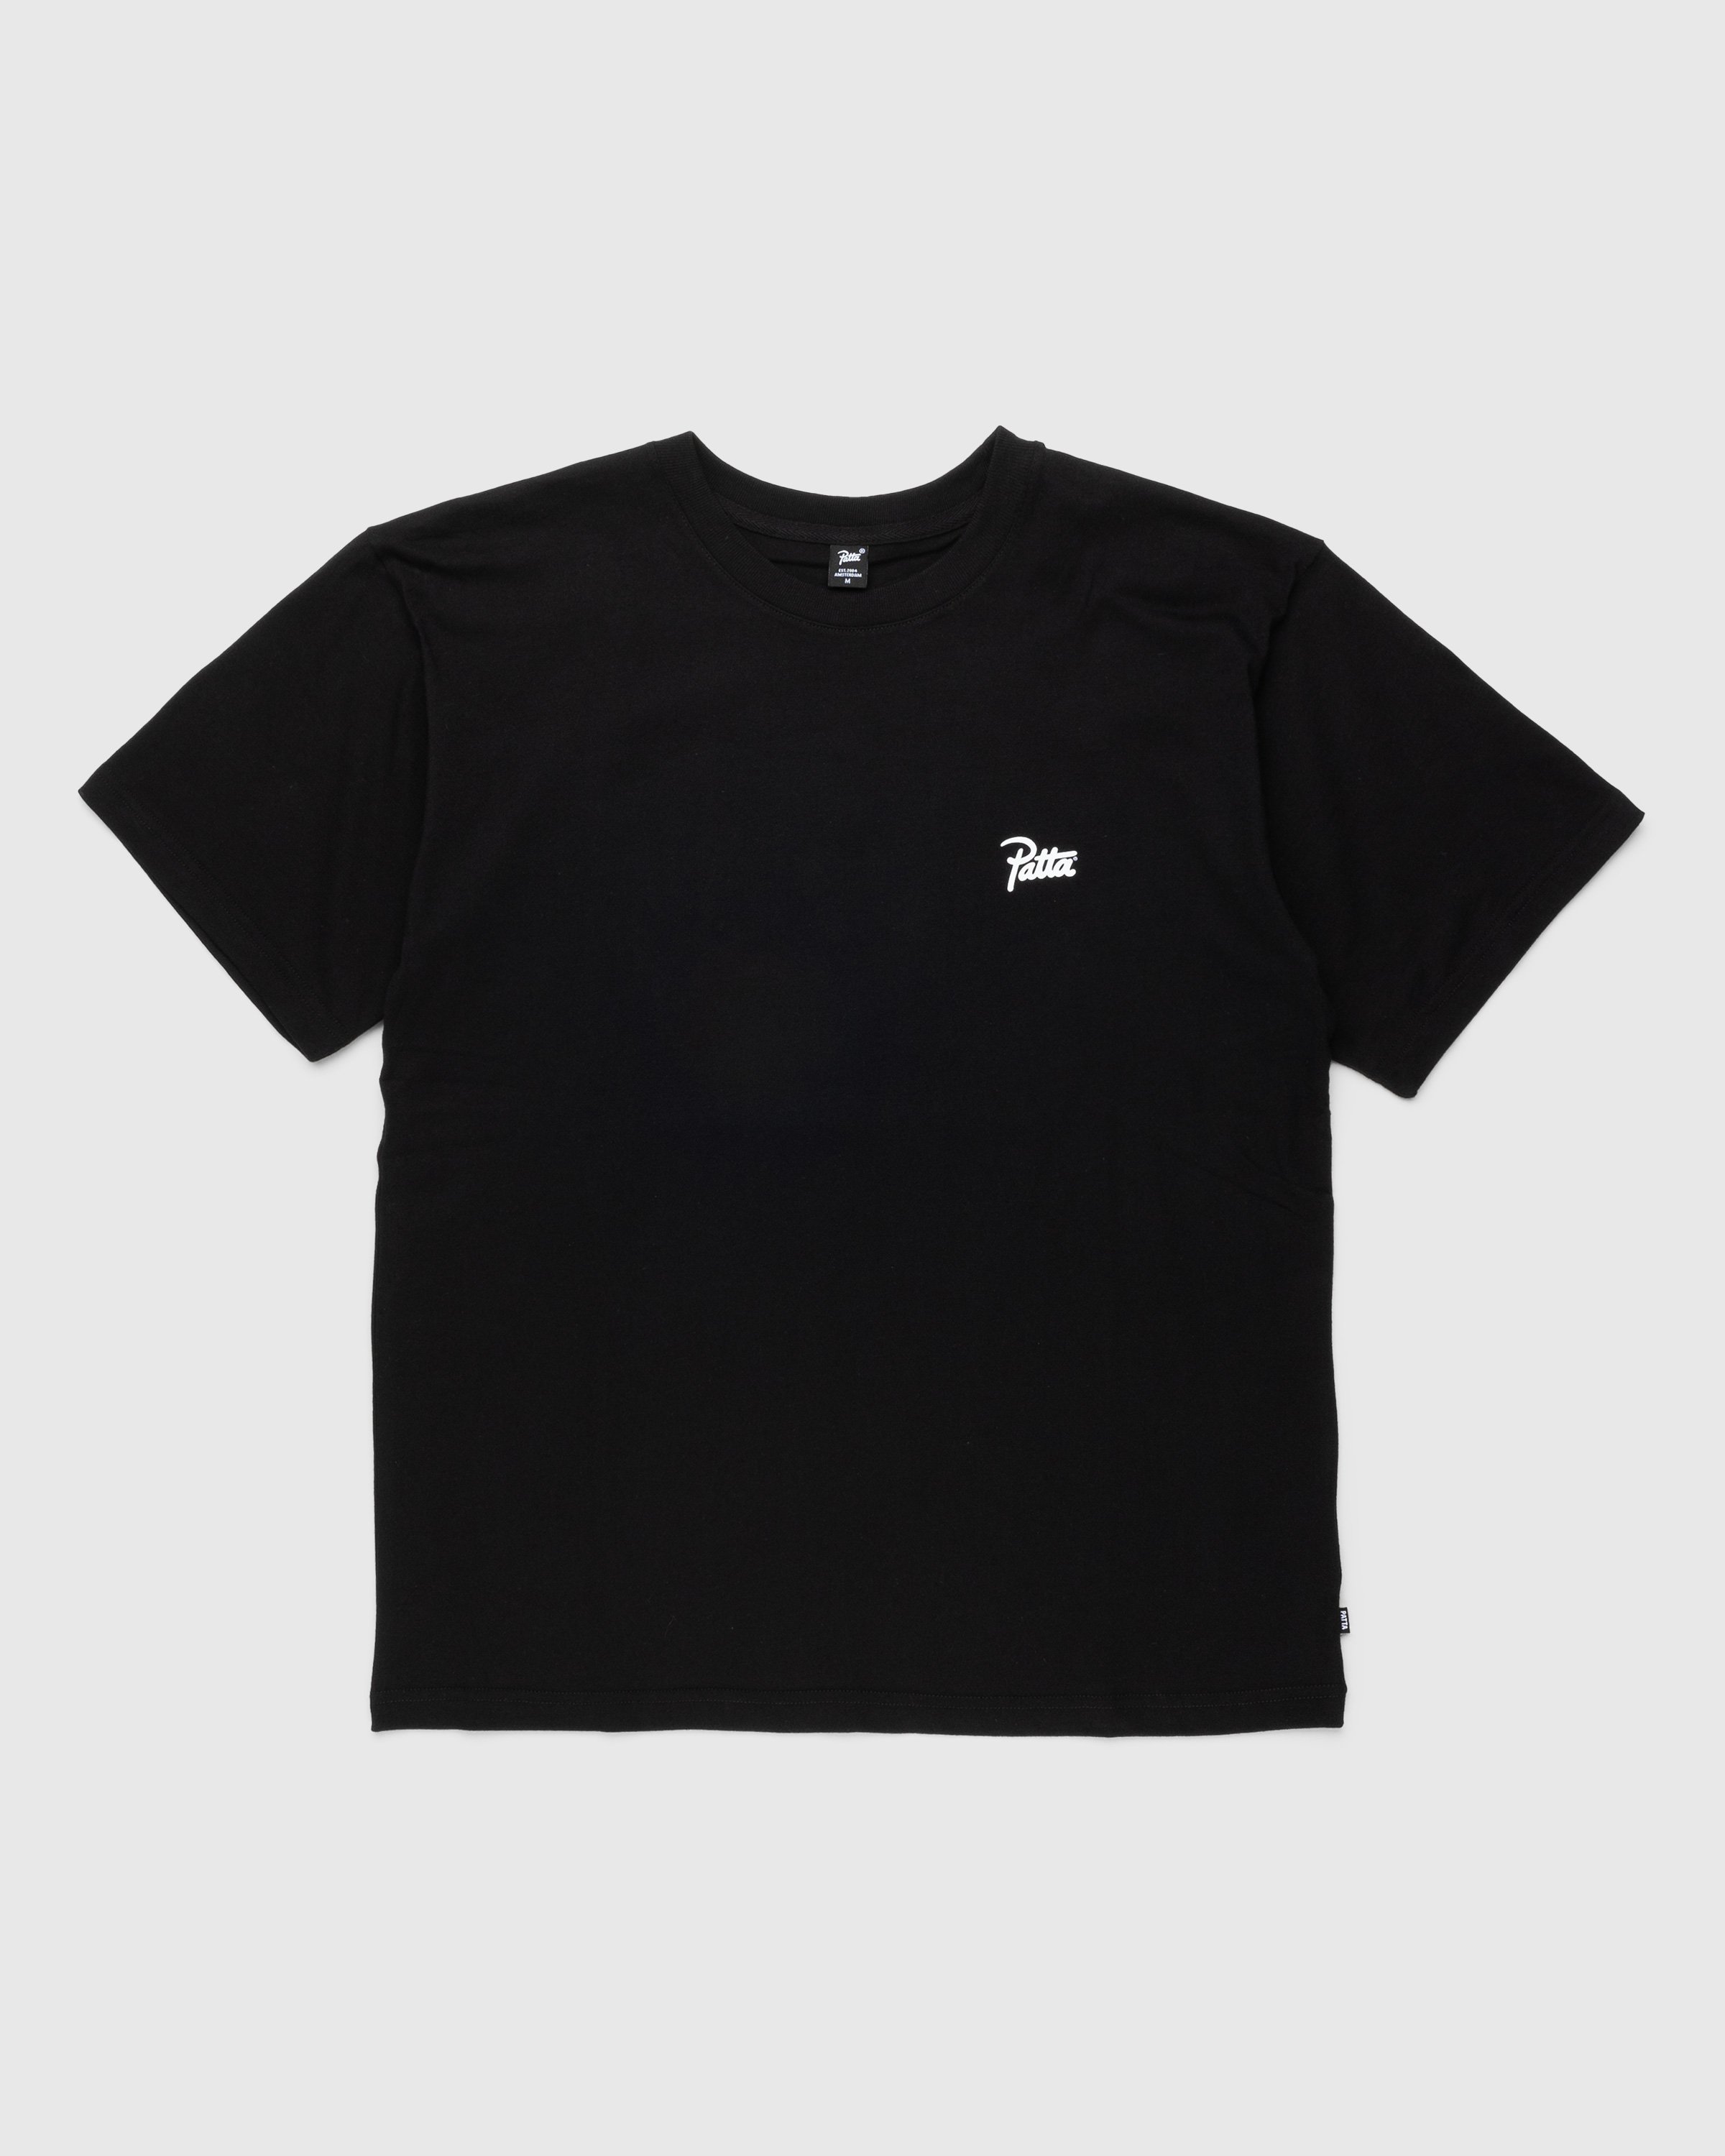 Patta – Pattassium T-Shirt Black | Highsnobiety Shop